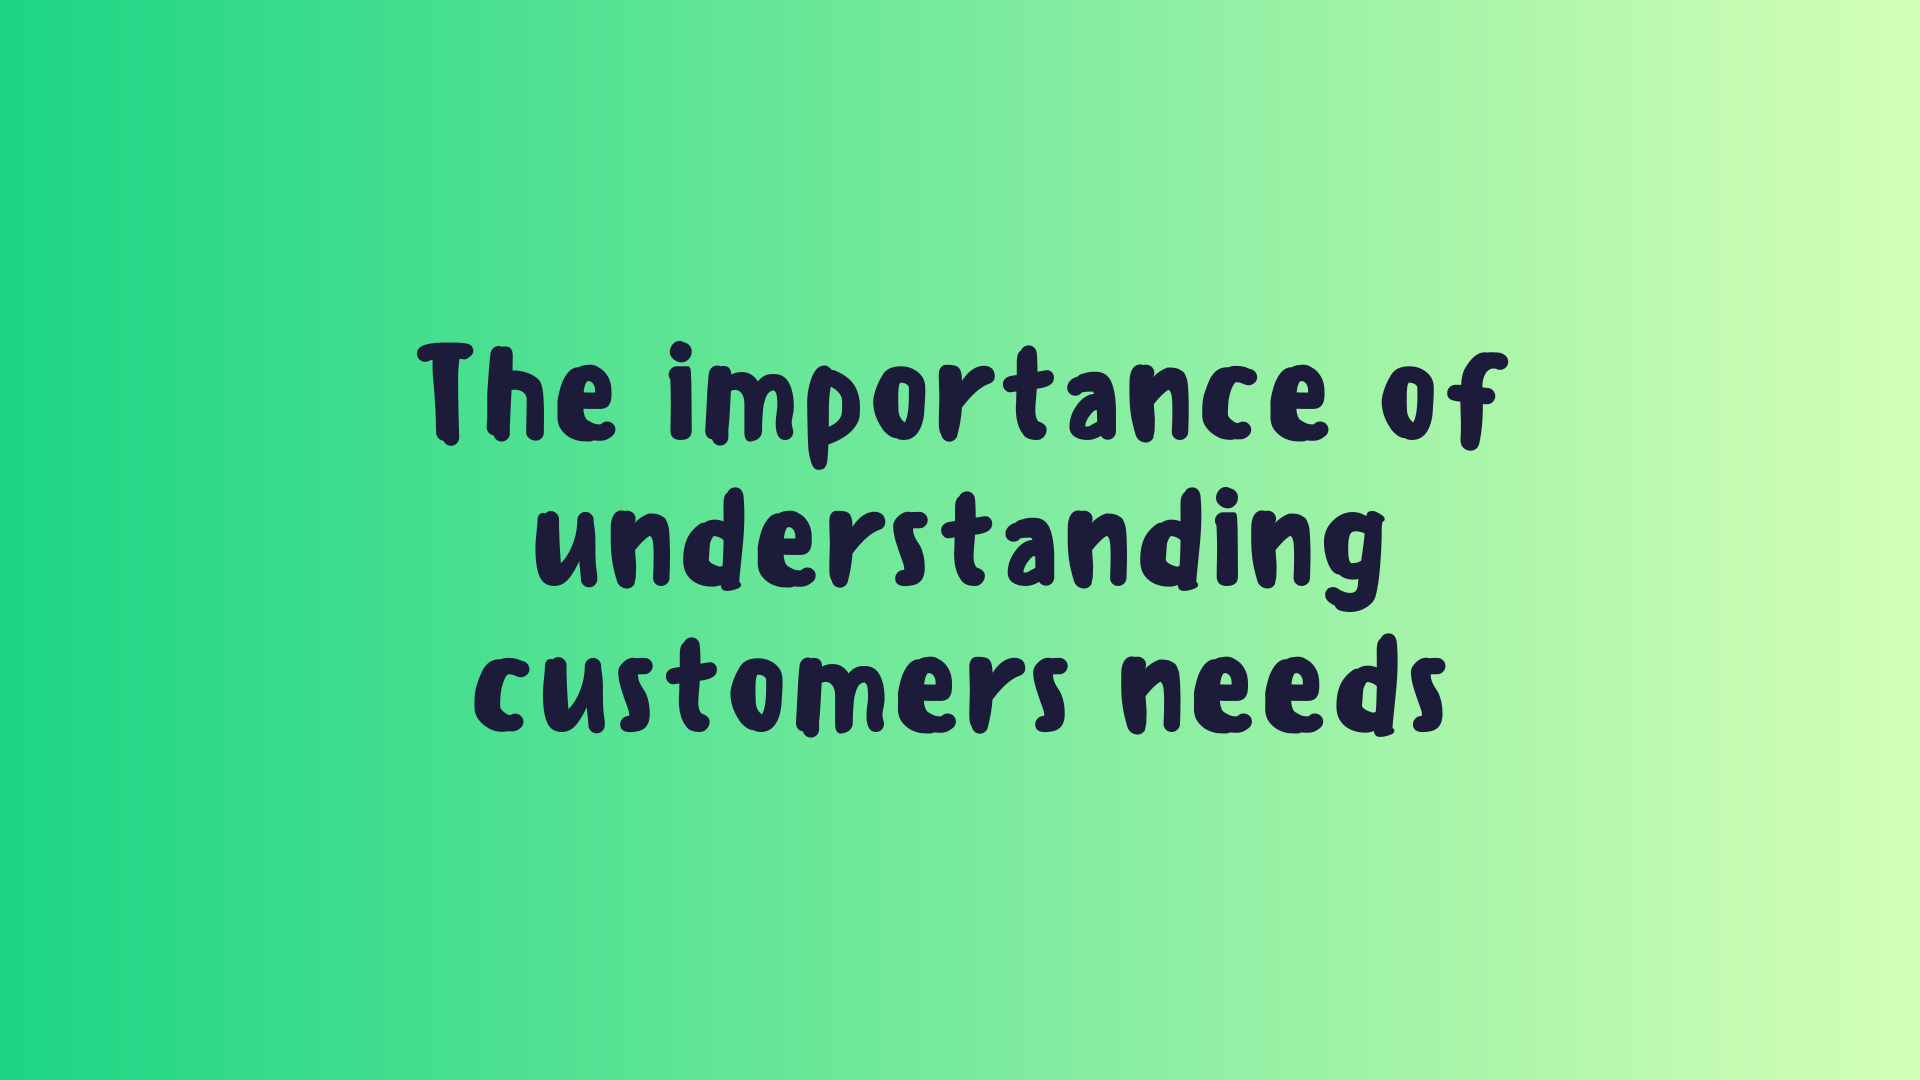 The importance of understanding customers needs